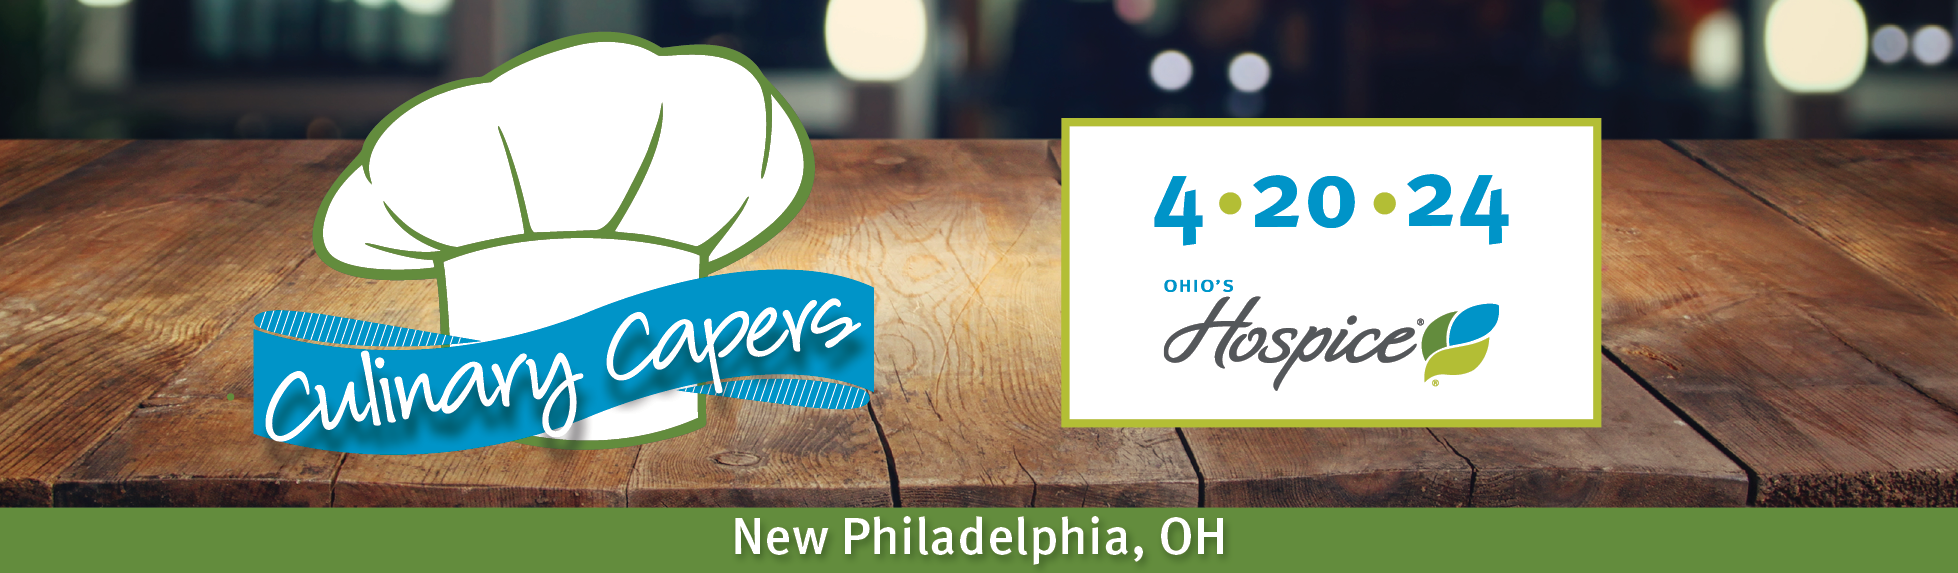 Ohio's Hospice Culinary Capers 4.20.24 New Philadelphia, OH